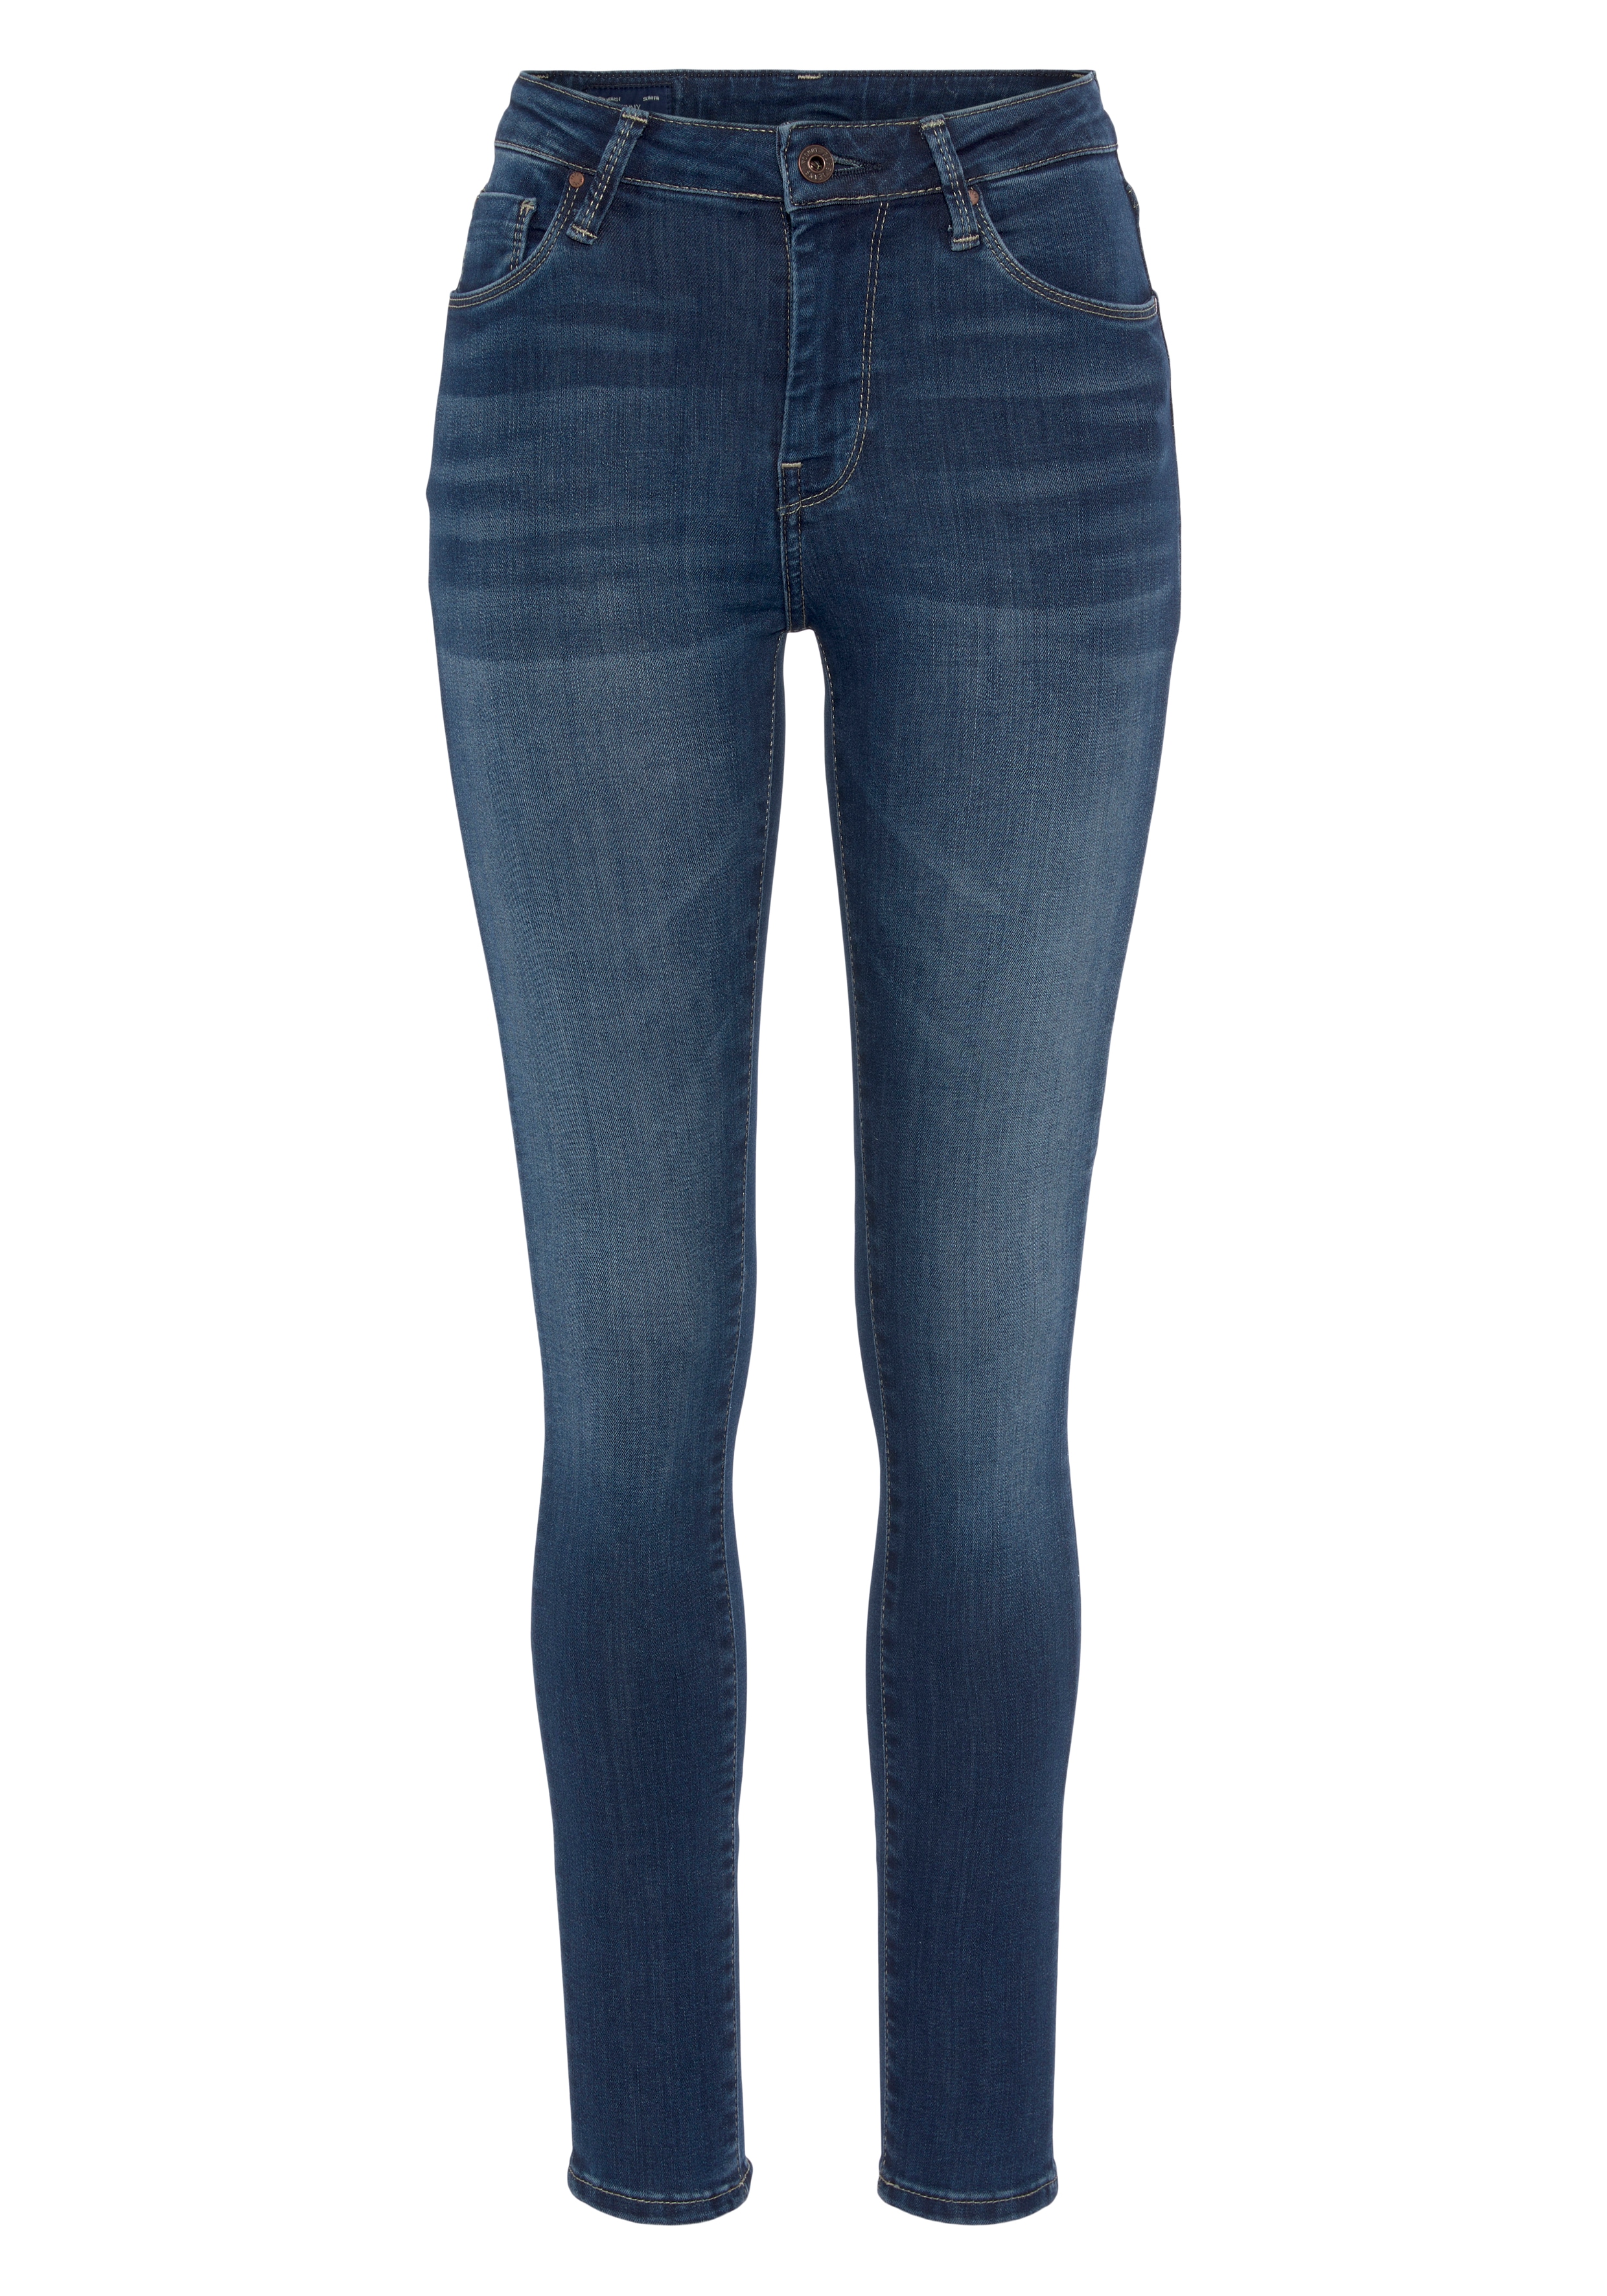 Pepe Jeans Röhrenjeans »REGENT«, in Skinny Passform mit hohem Bund aus seidig bequemem Stretch Denim-Pepe Jeans 1